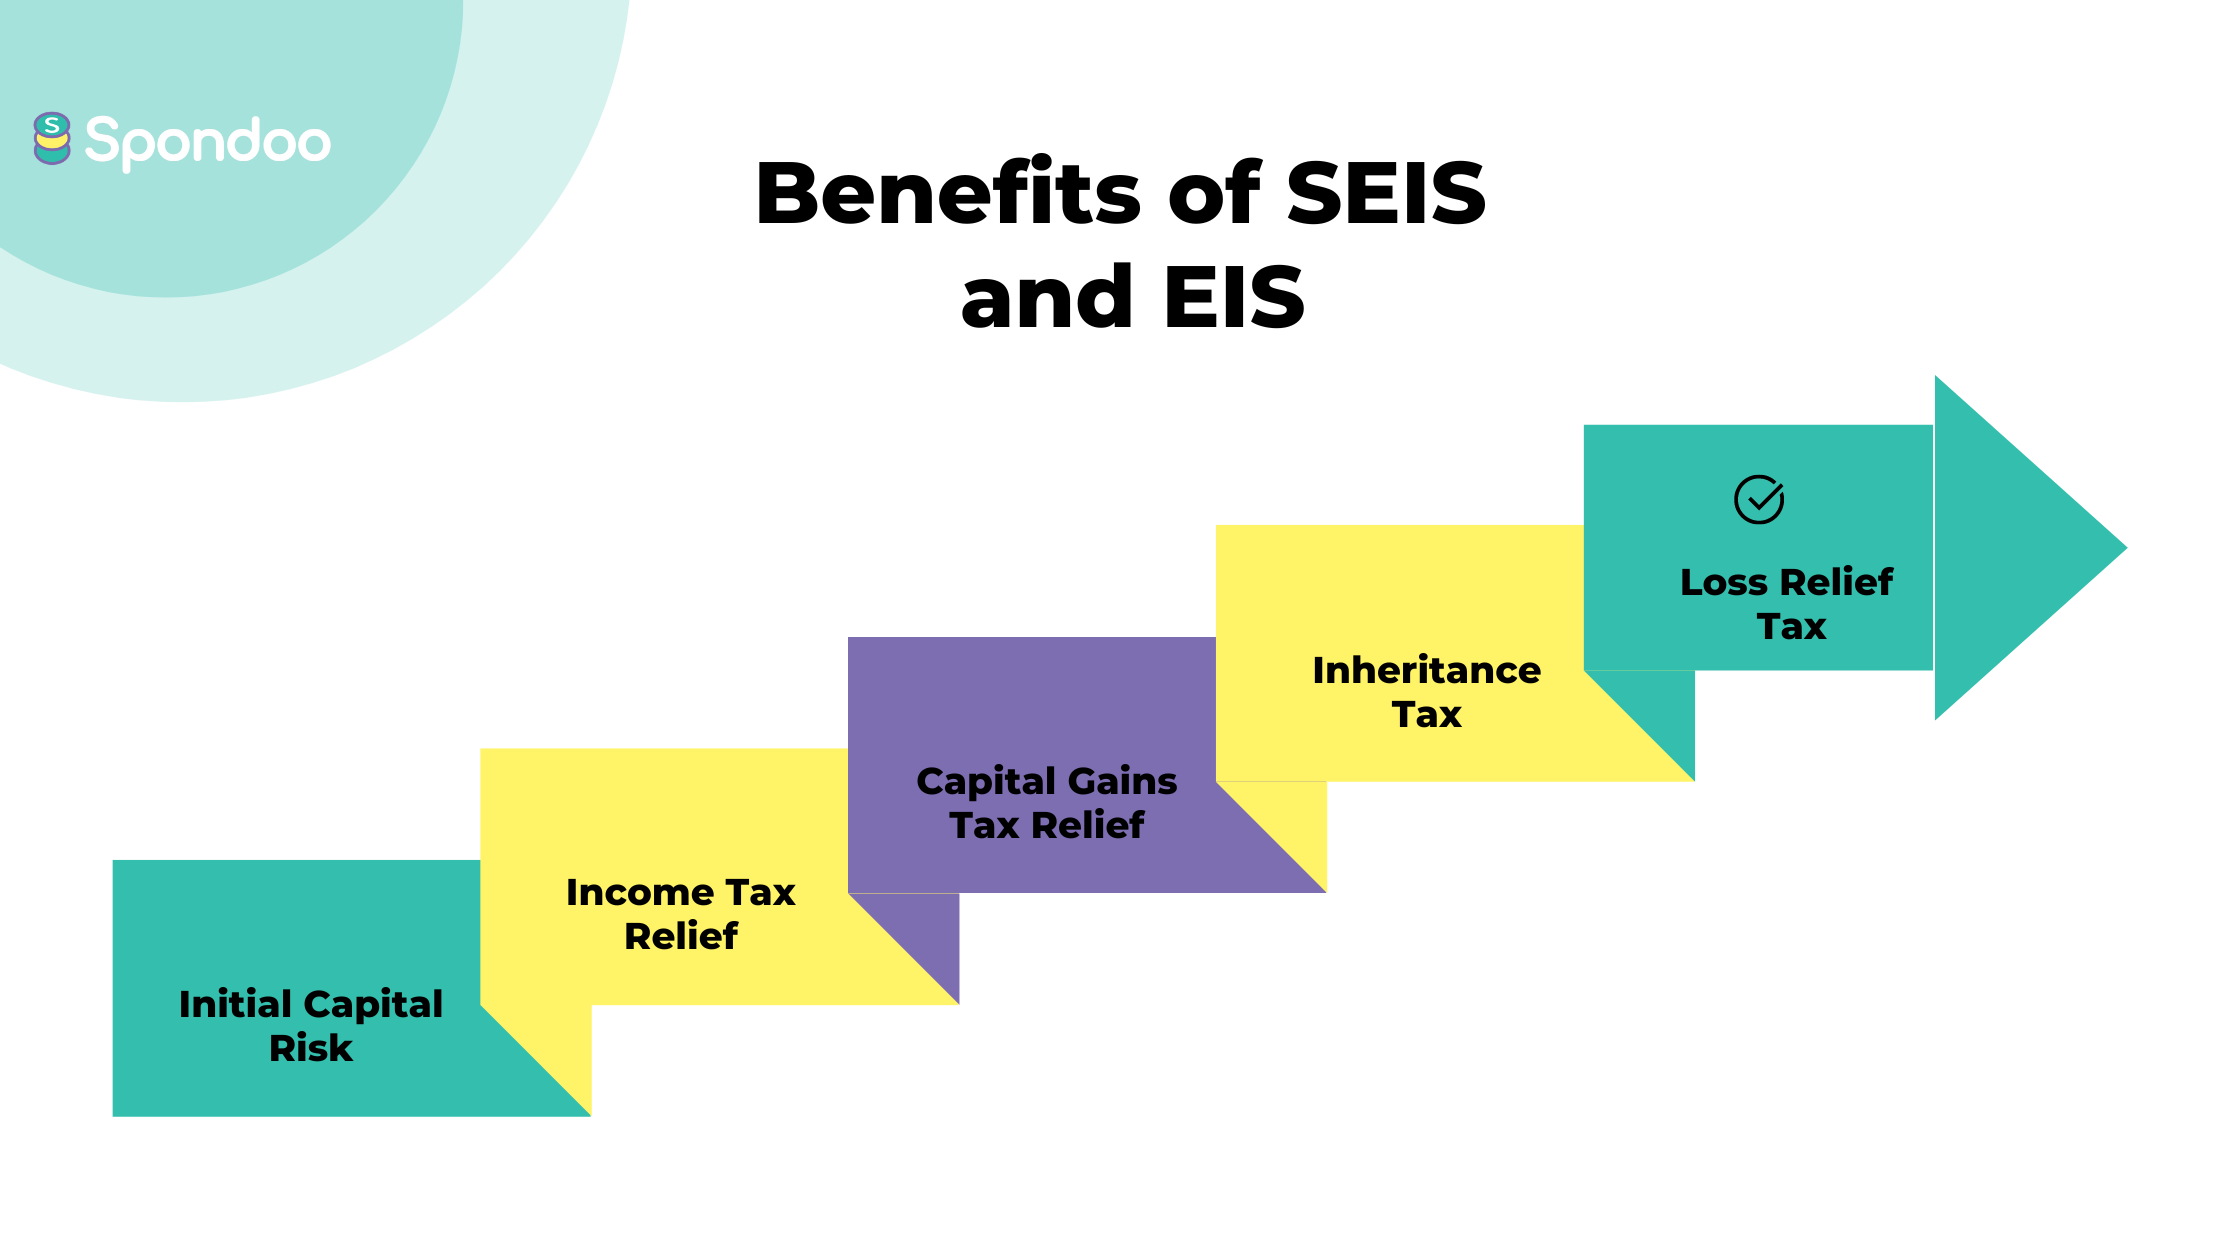 eis-tax-relief-maximizing-savings-and-minimizing-taxes-youtube